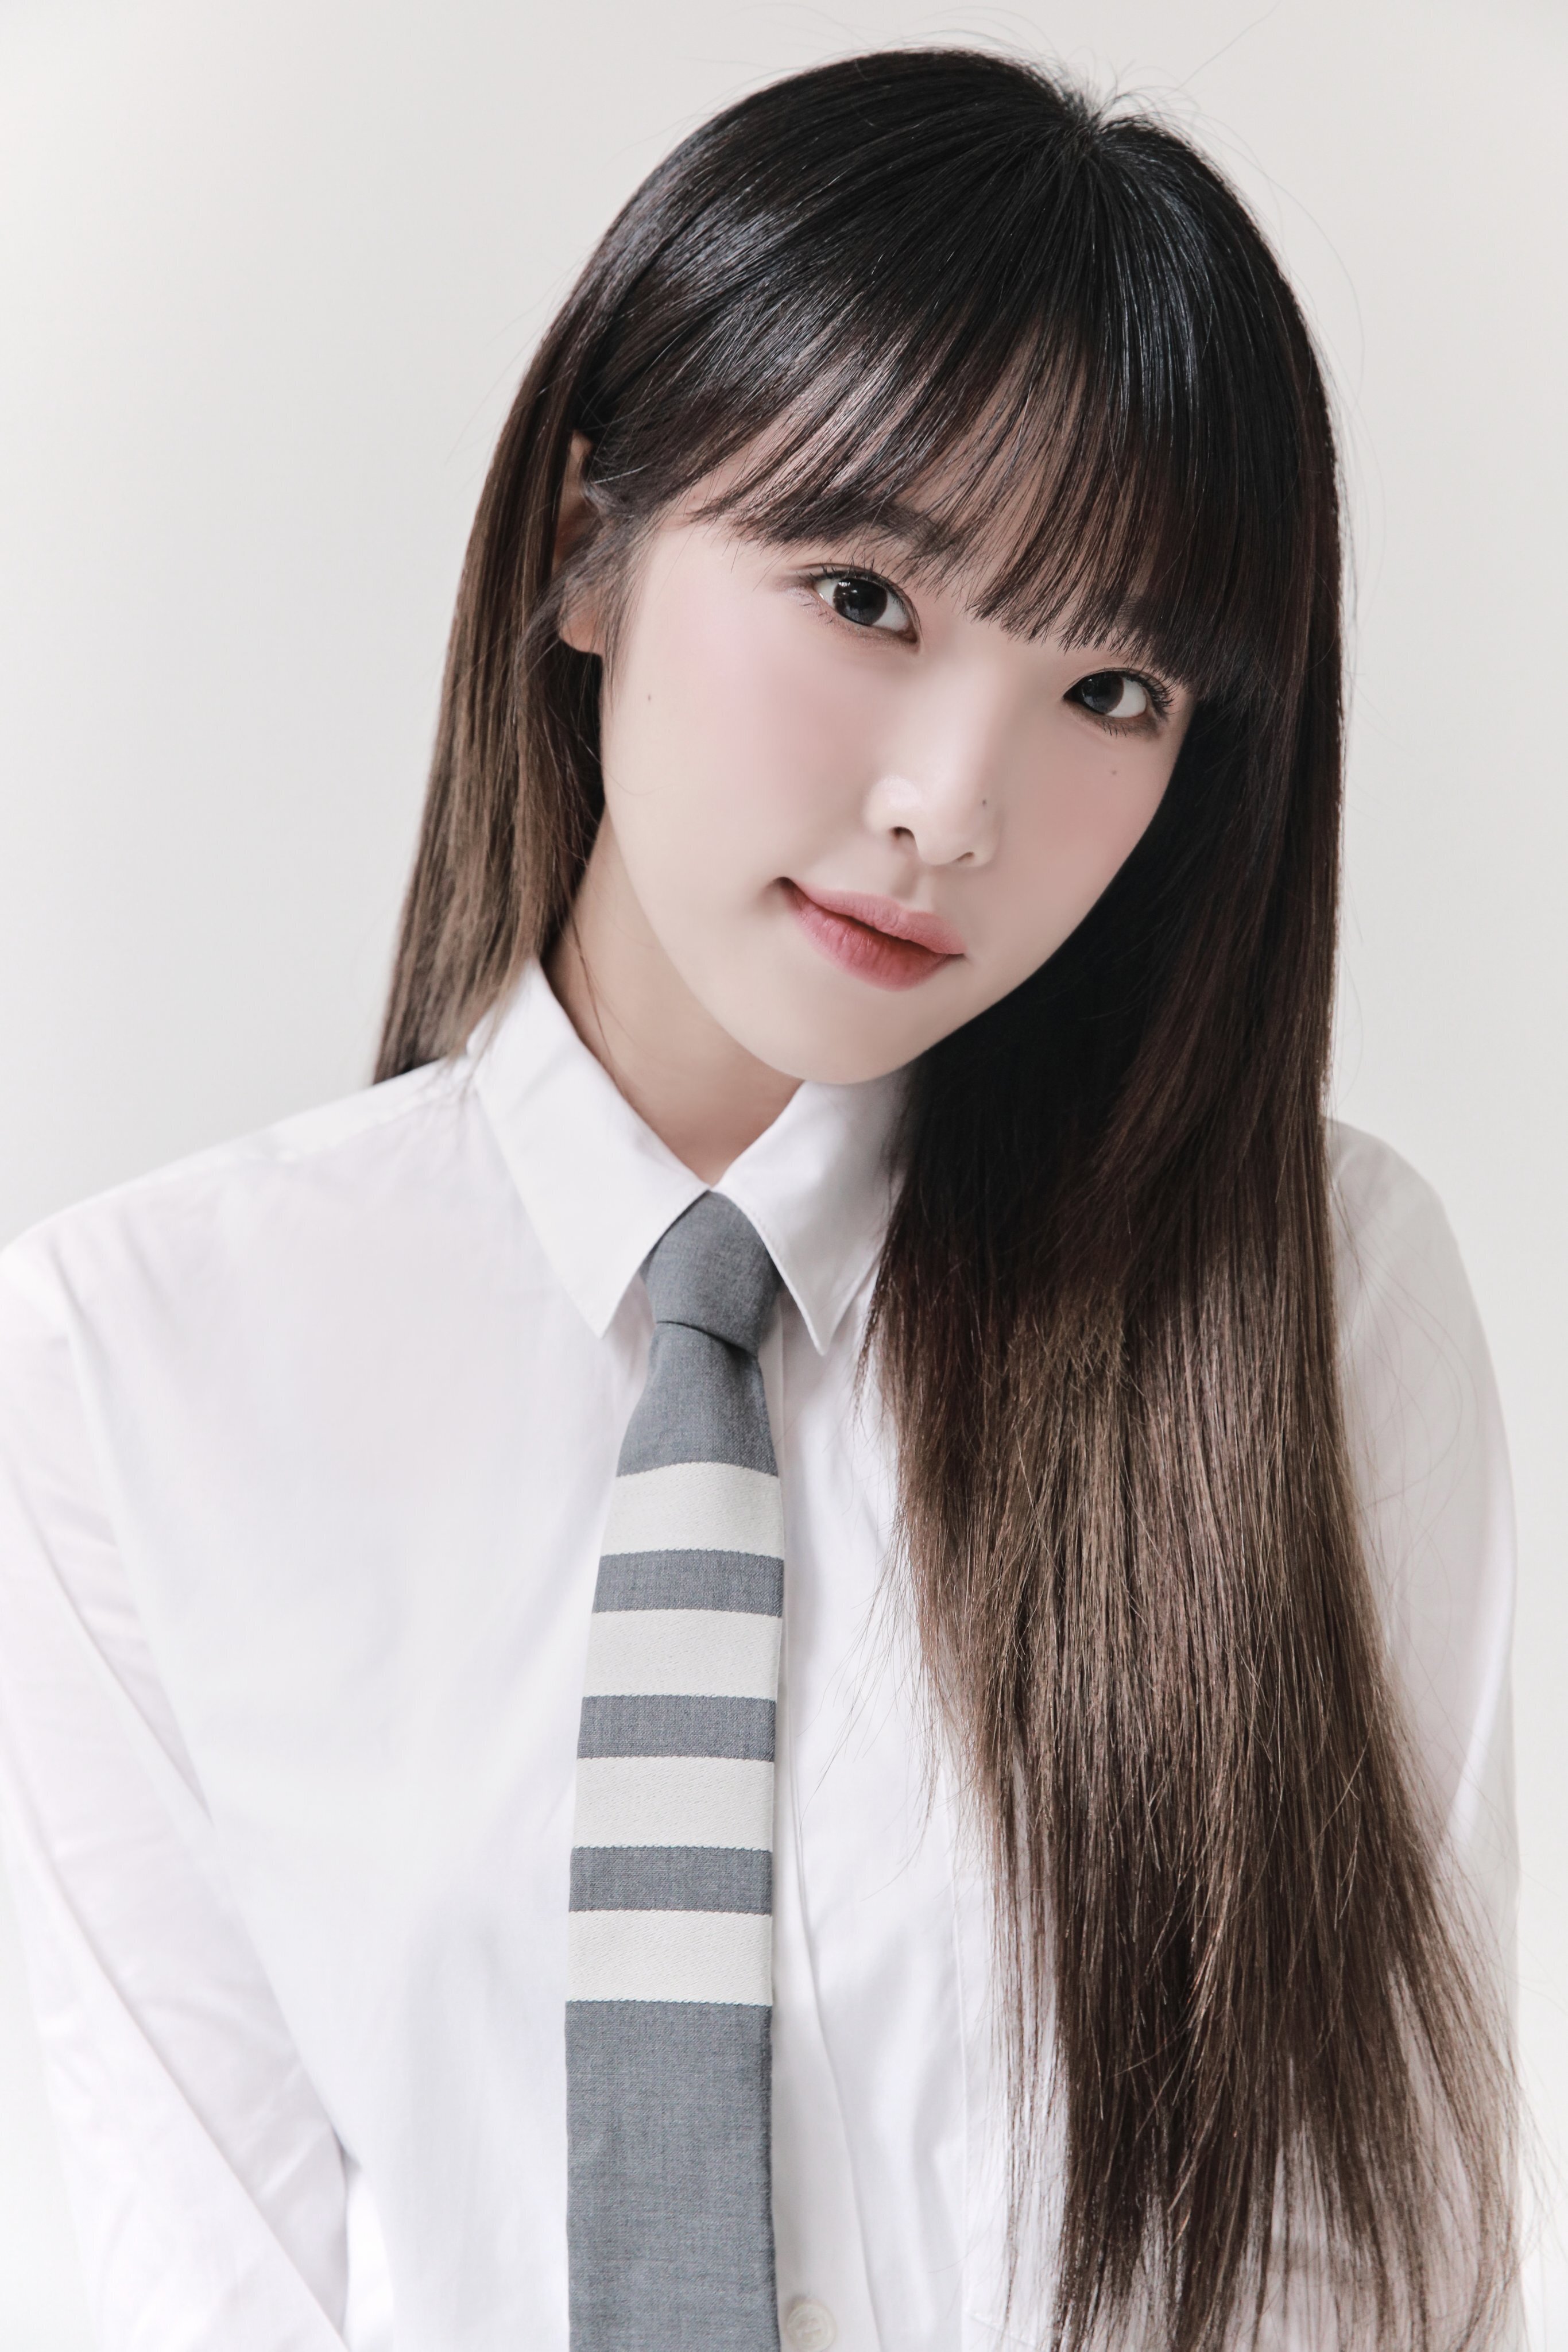 Yena 2021 Profile Photos | kpopping